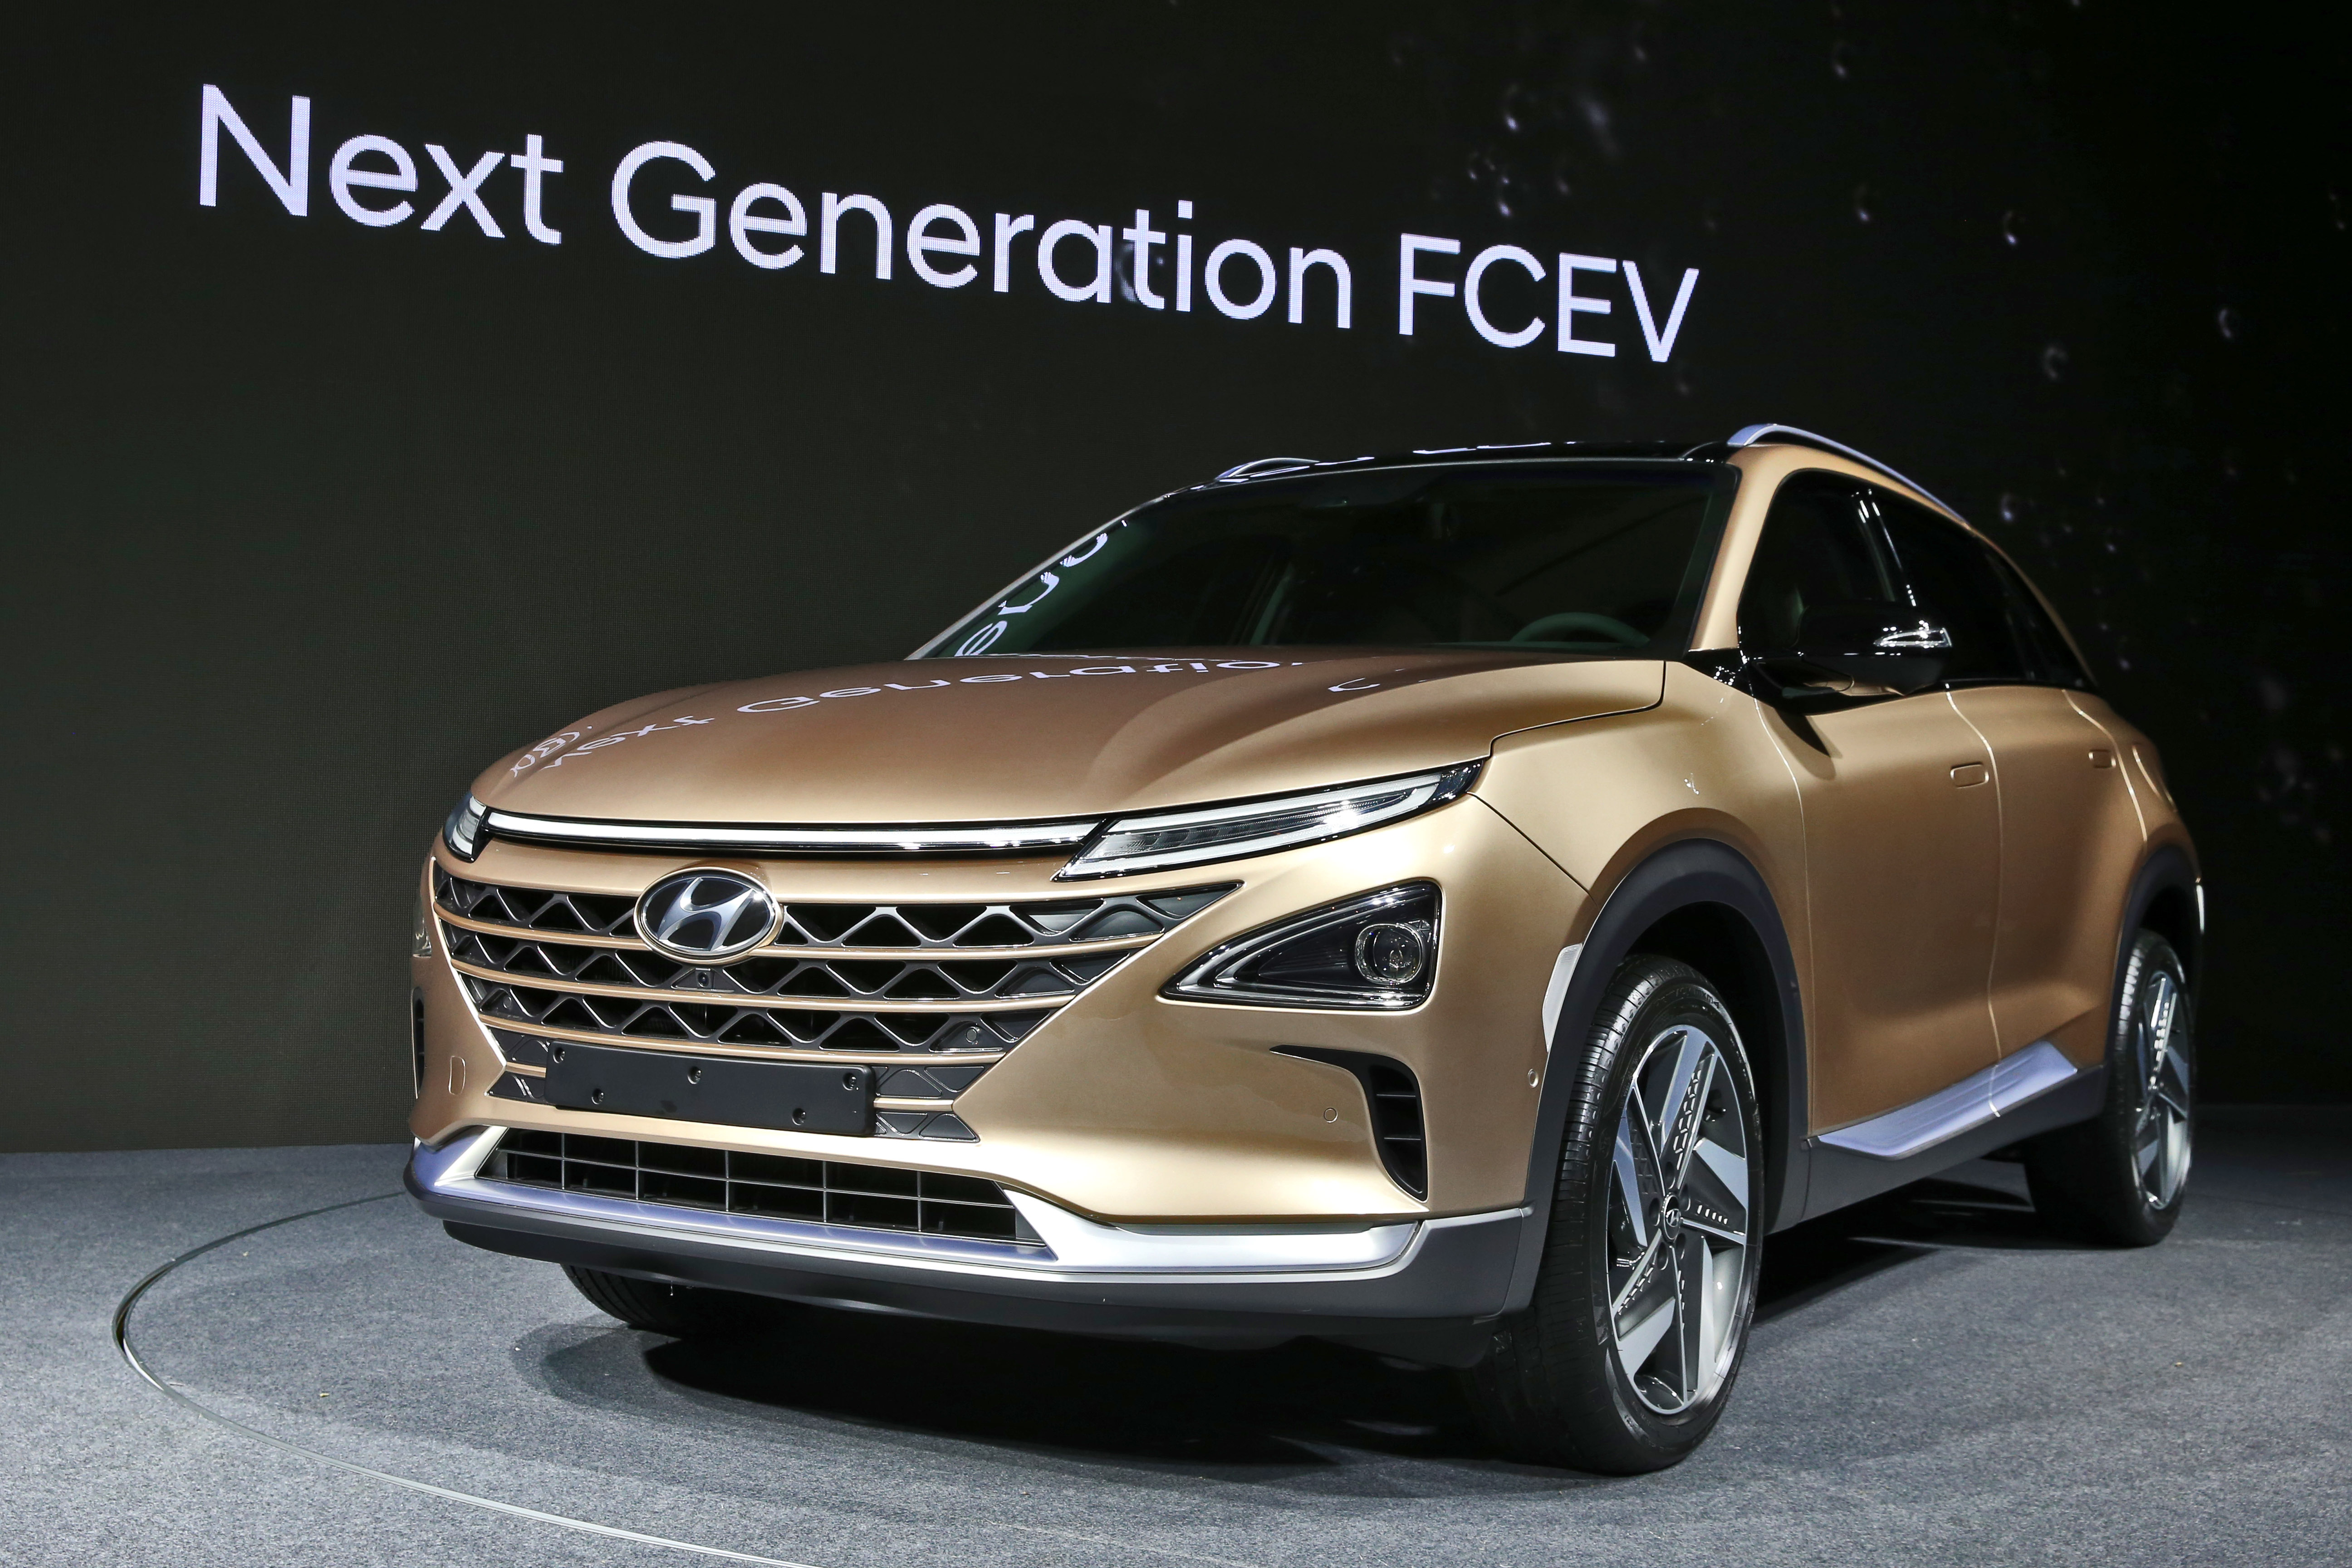 Hyundai Hydrogen, FCA Future, & Seat Belt Lawsuit